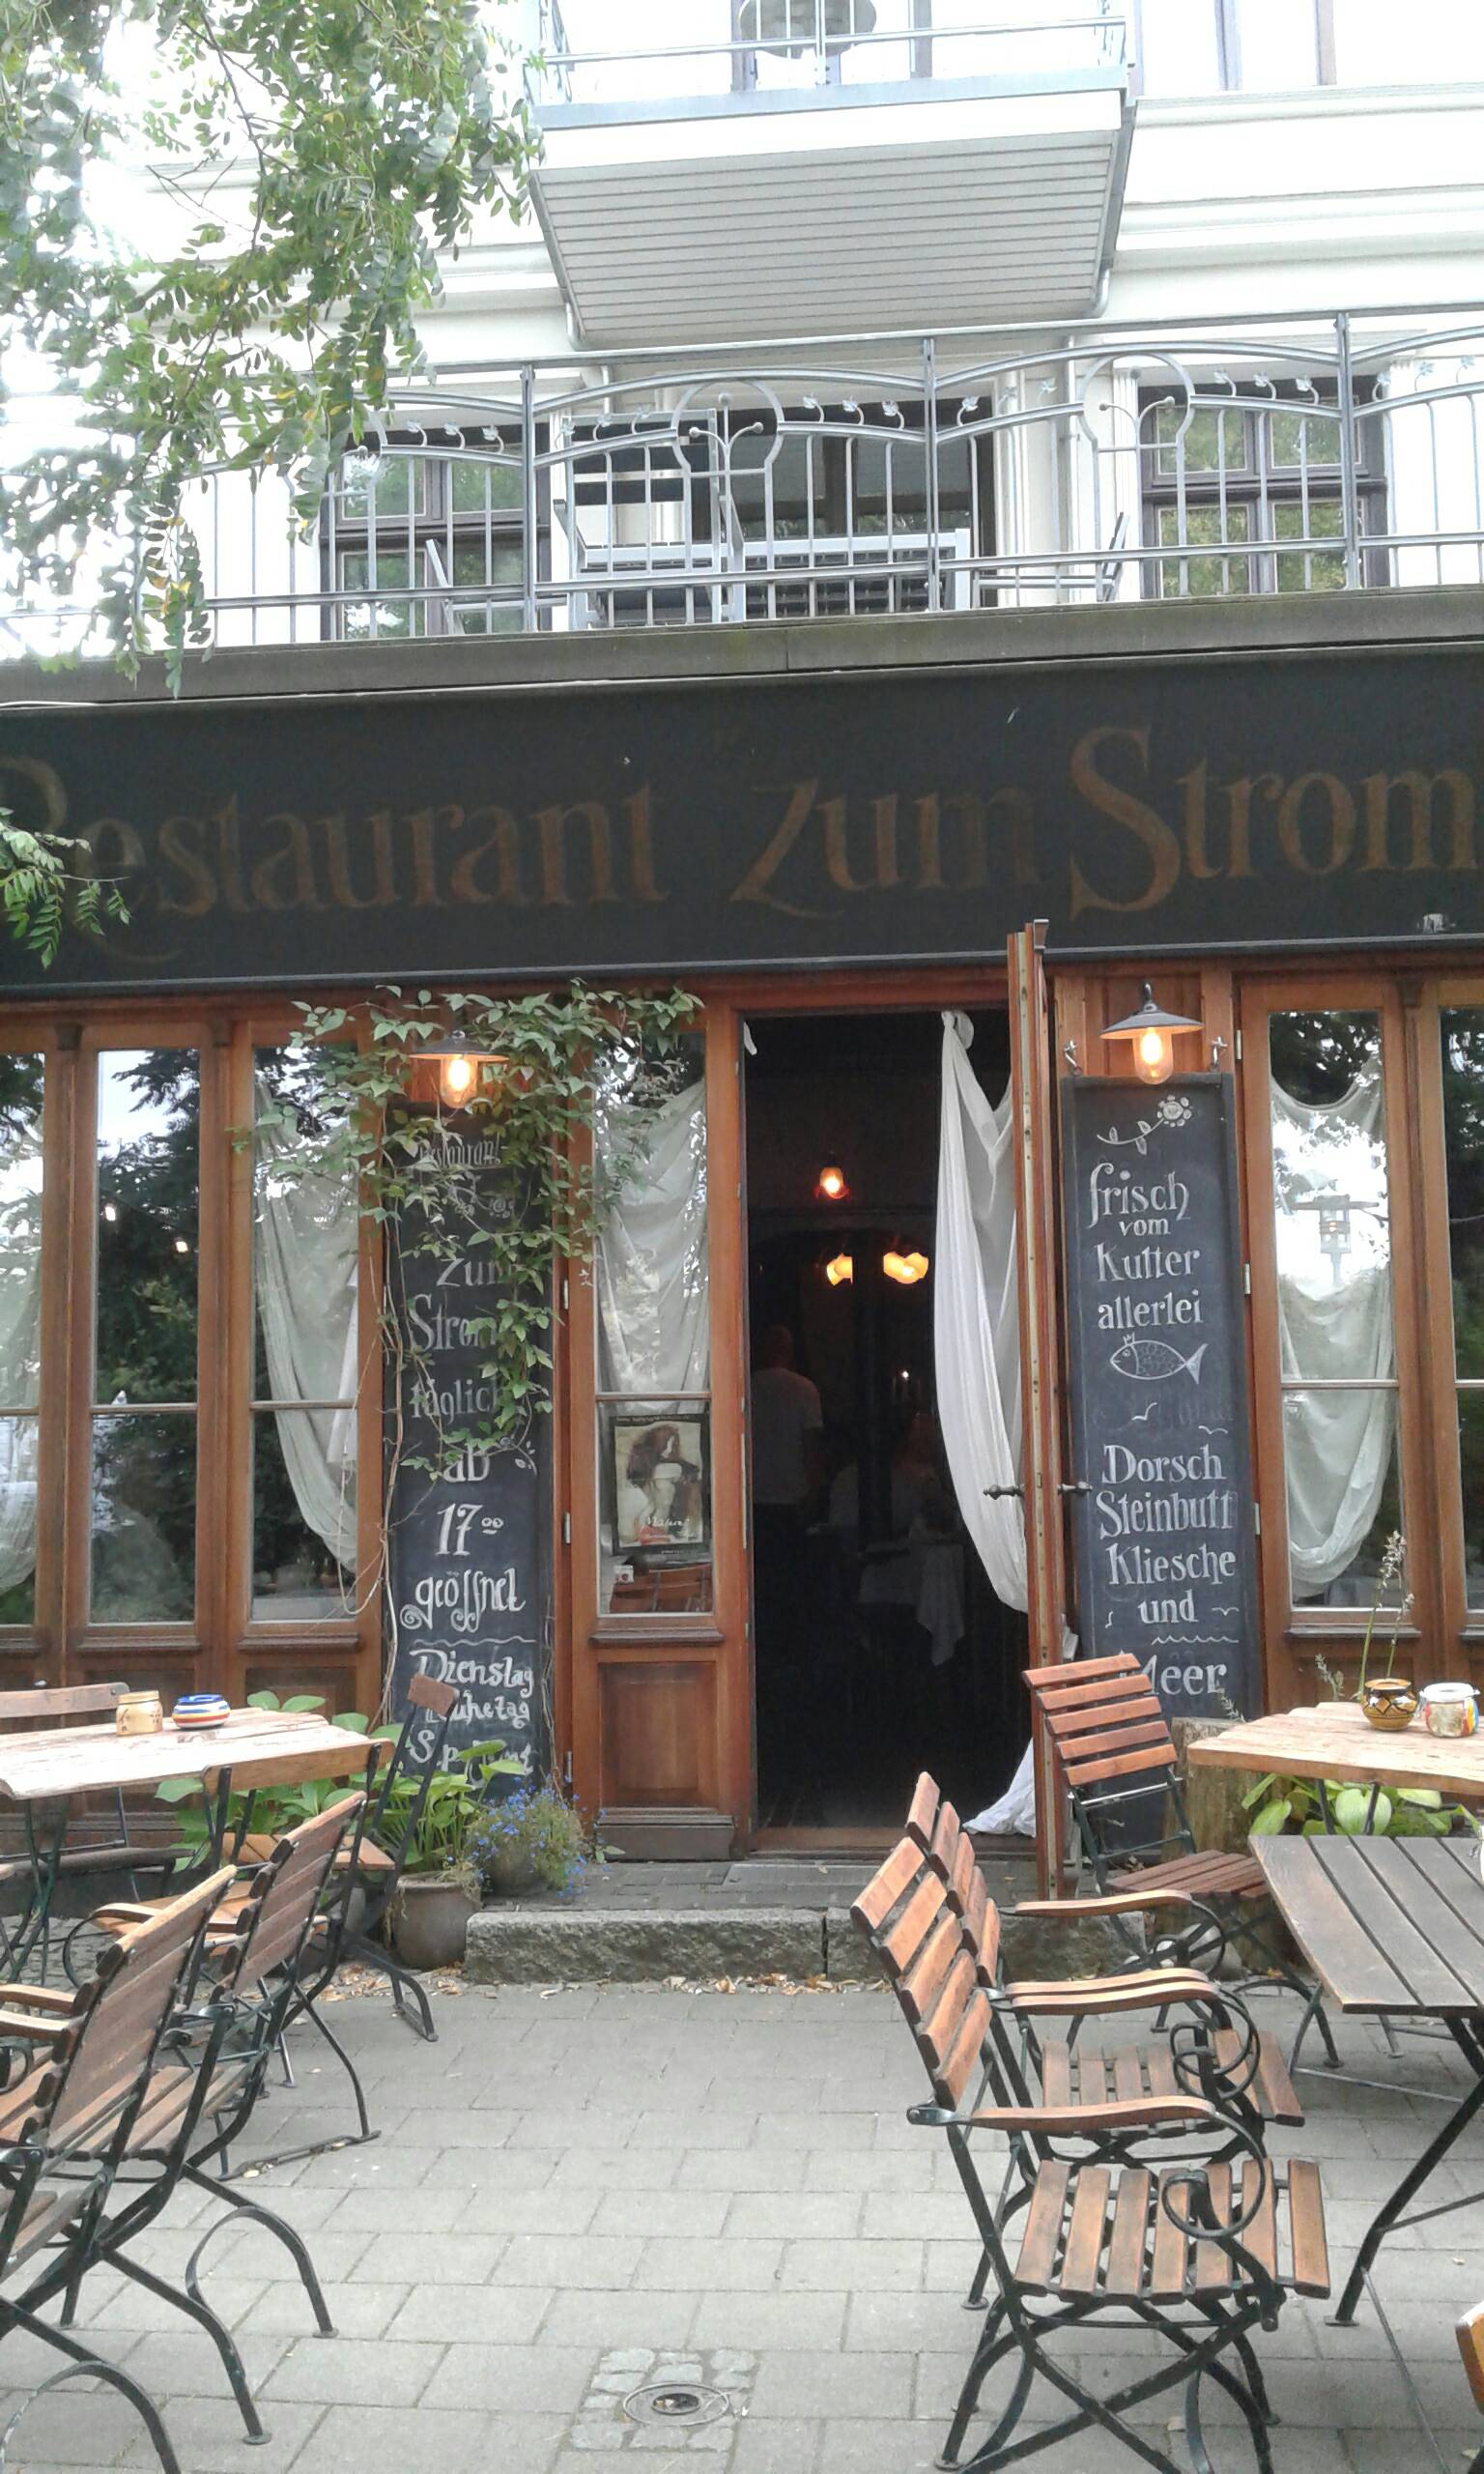 Bild 2 Restaurant "Zum Stromer" in Rostock